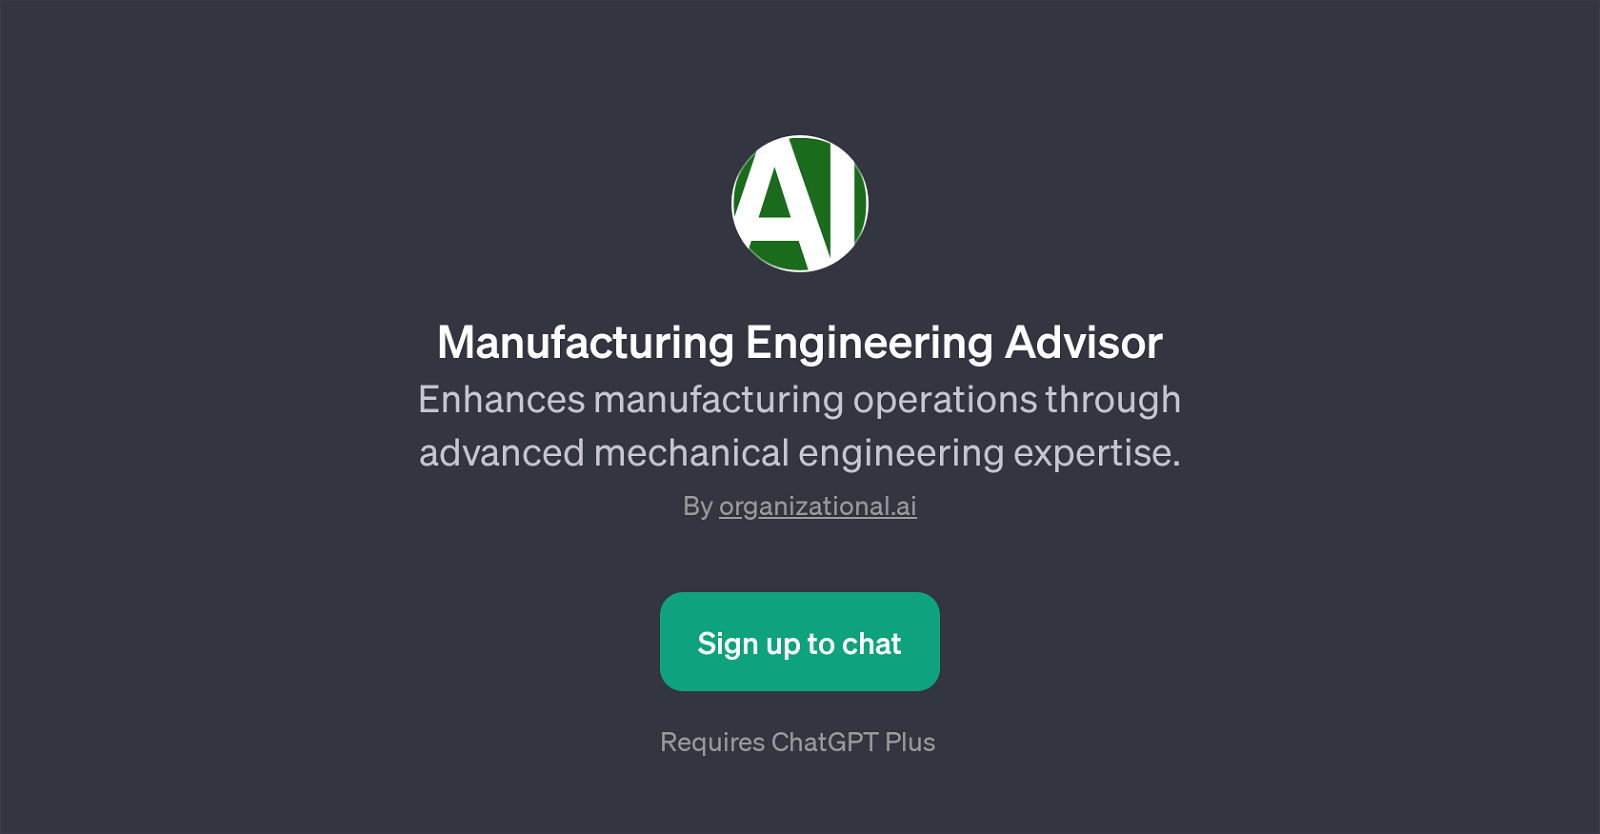 Manufacturing Engineering Advisor website